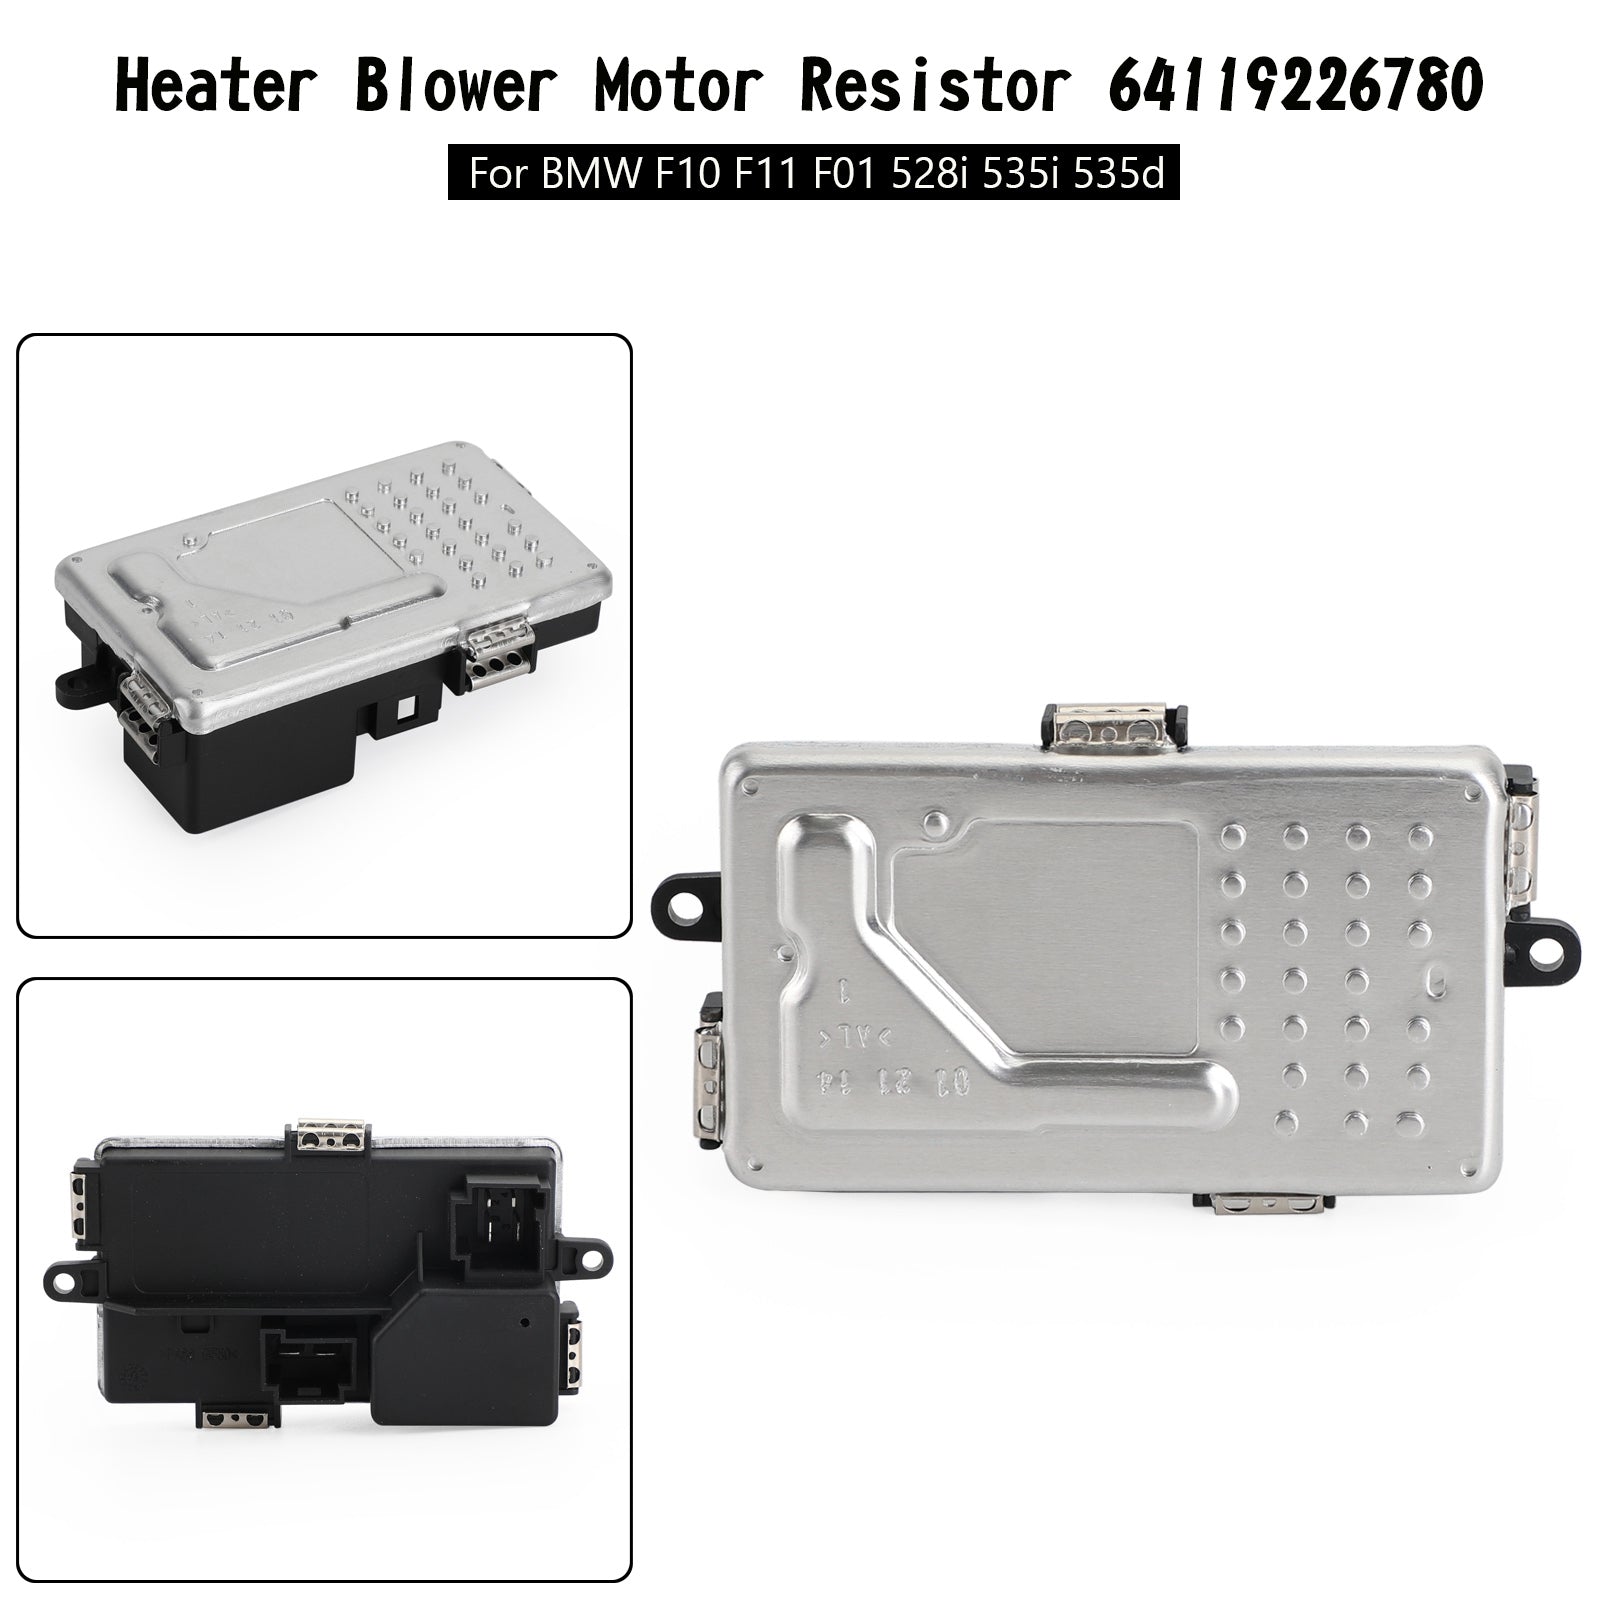 Heater Blower Motor Resistor 64119226780 For BMW F10 F11 F01 528i 535i 535d Generic